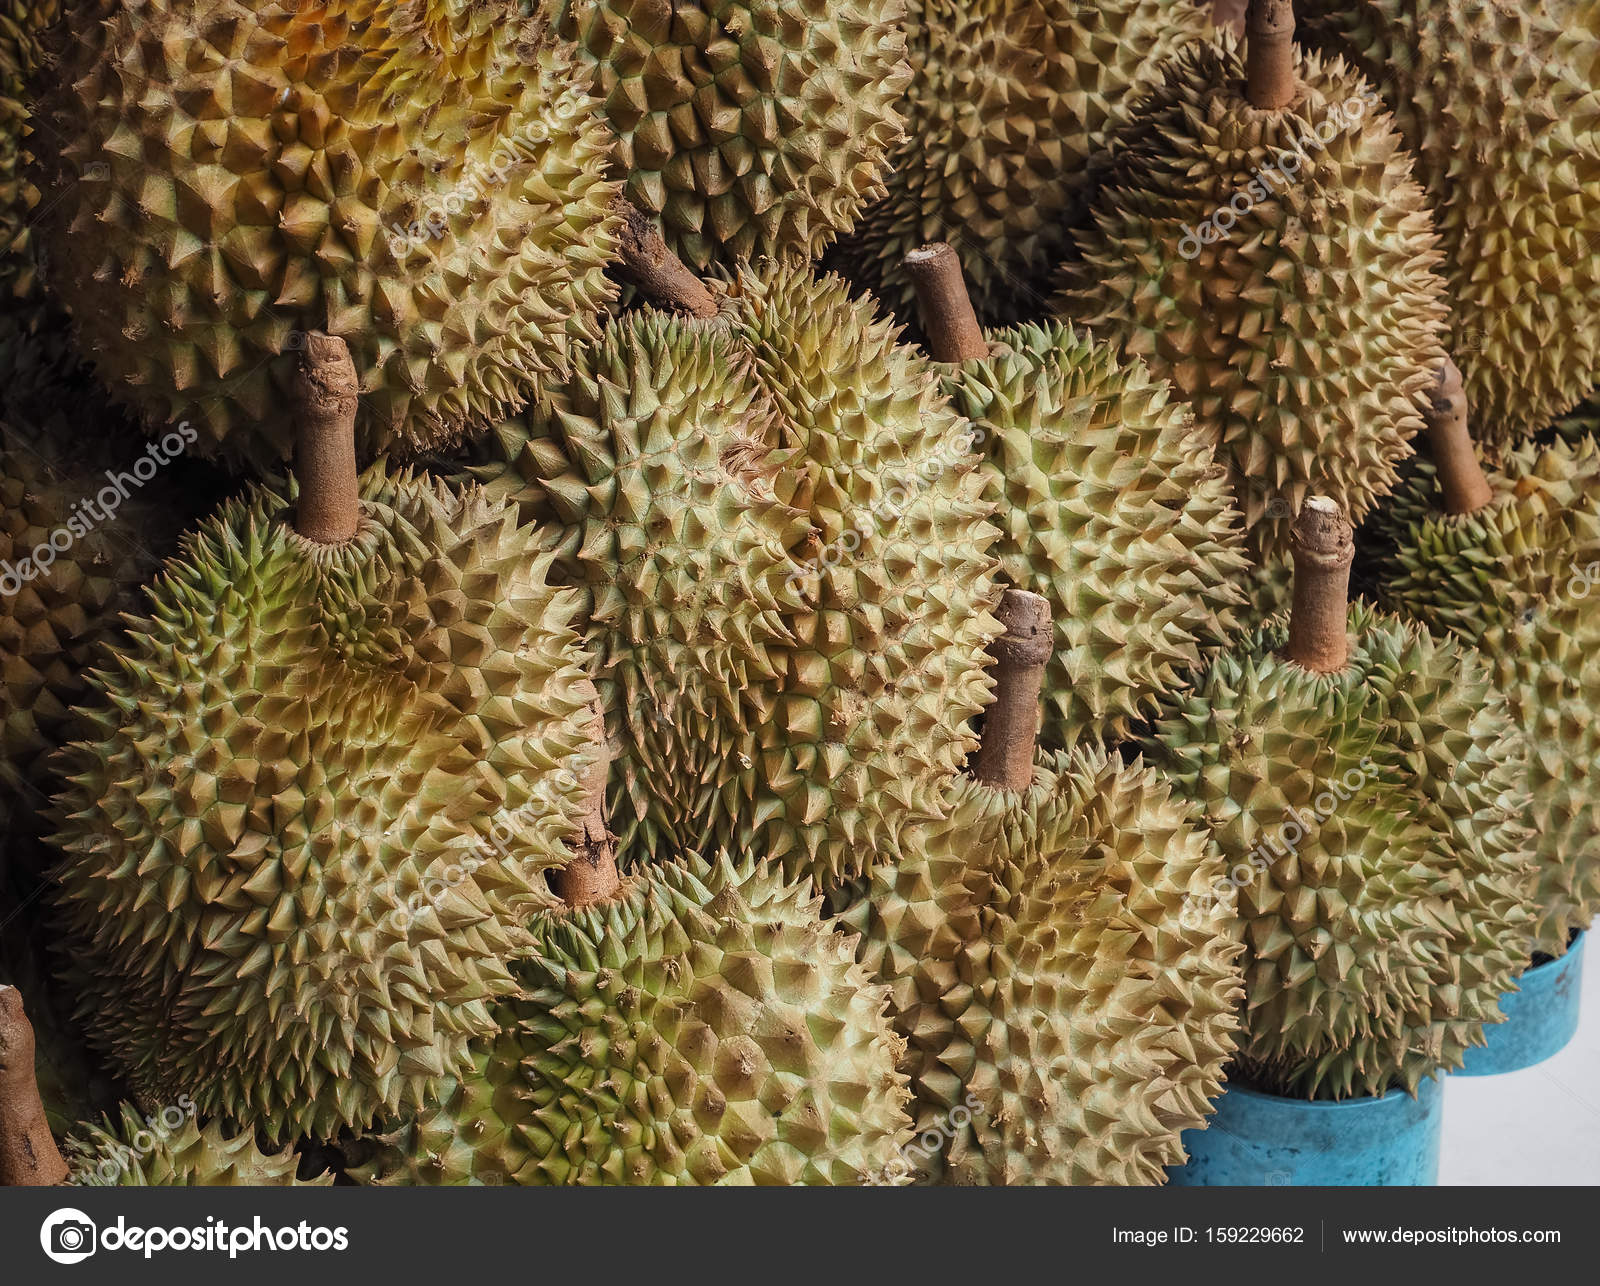 Durian fruit sale in farm market — Stock Photo © VICHAILAO #159229662